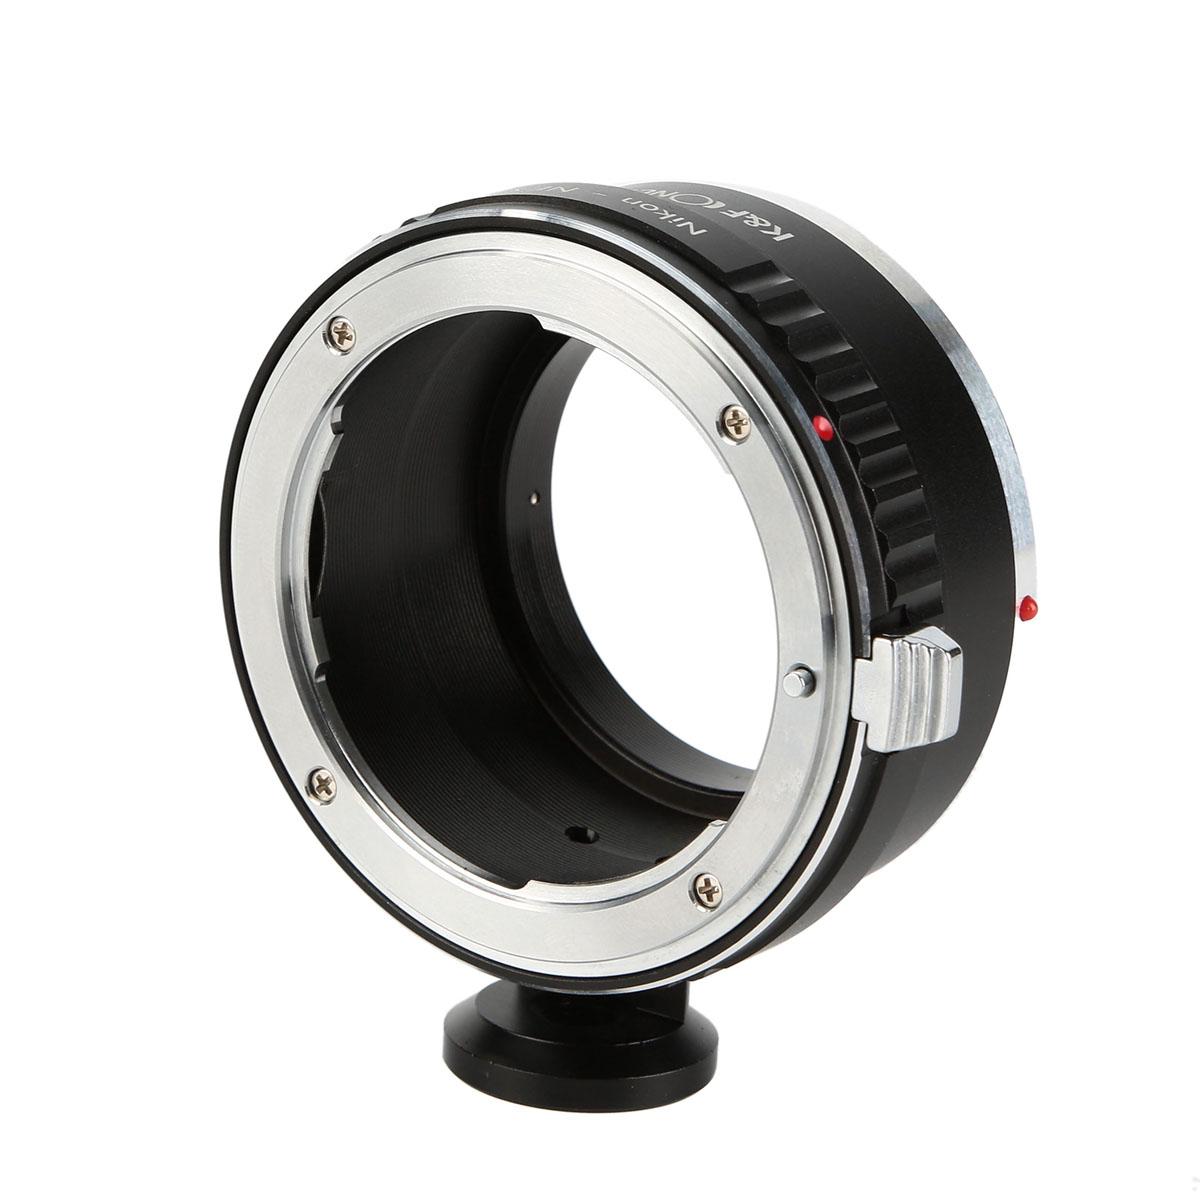 Nikon F Lenses to Sony E Mount Camera Adapter with Tripod Mount